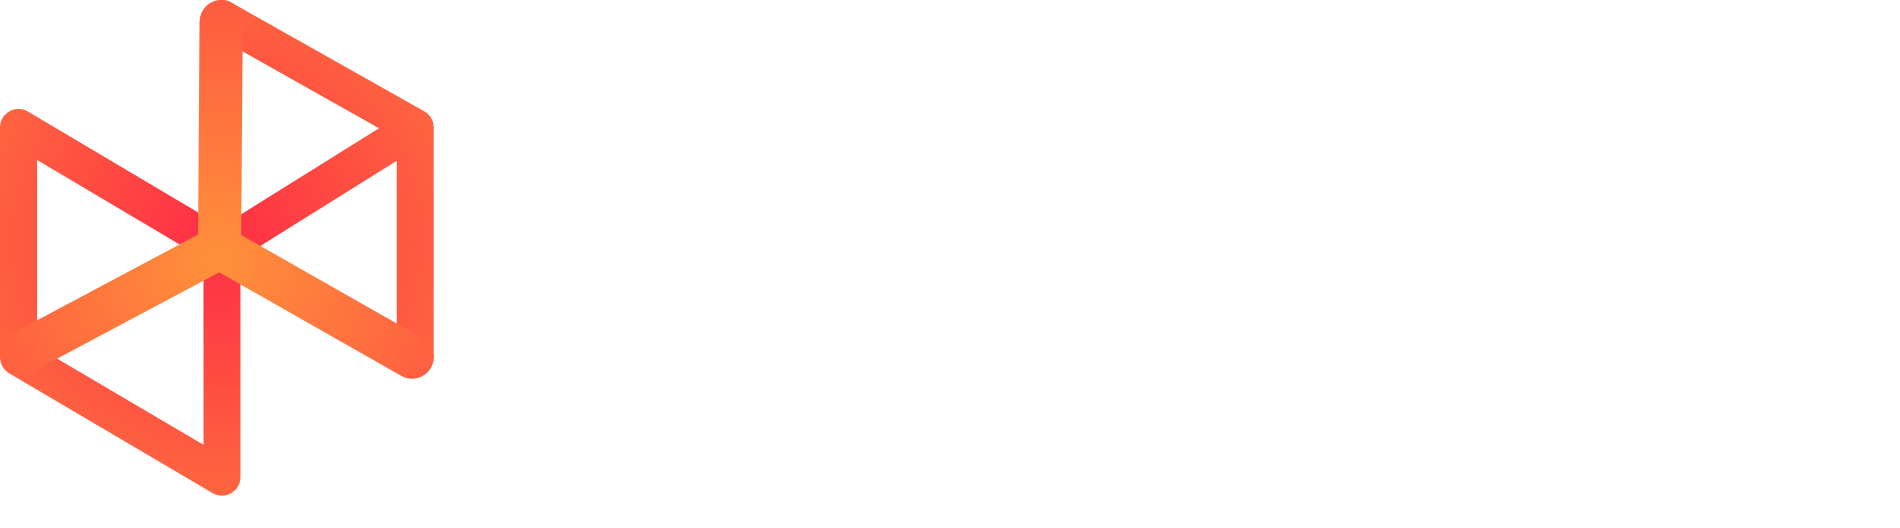 UX Strategy Blueprint text next to a geometric icon